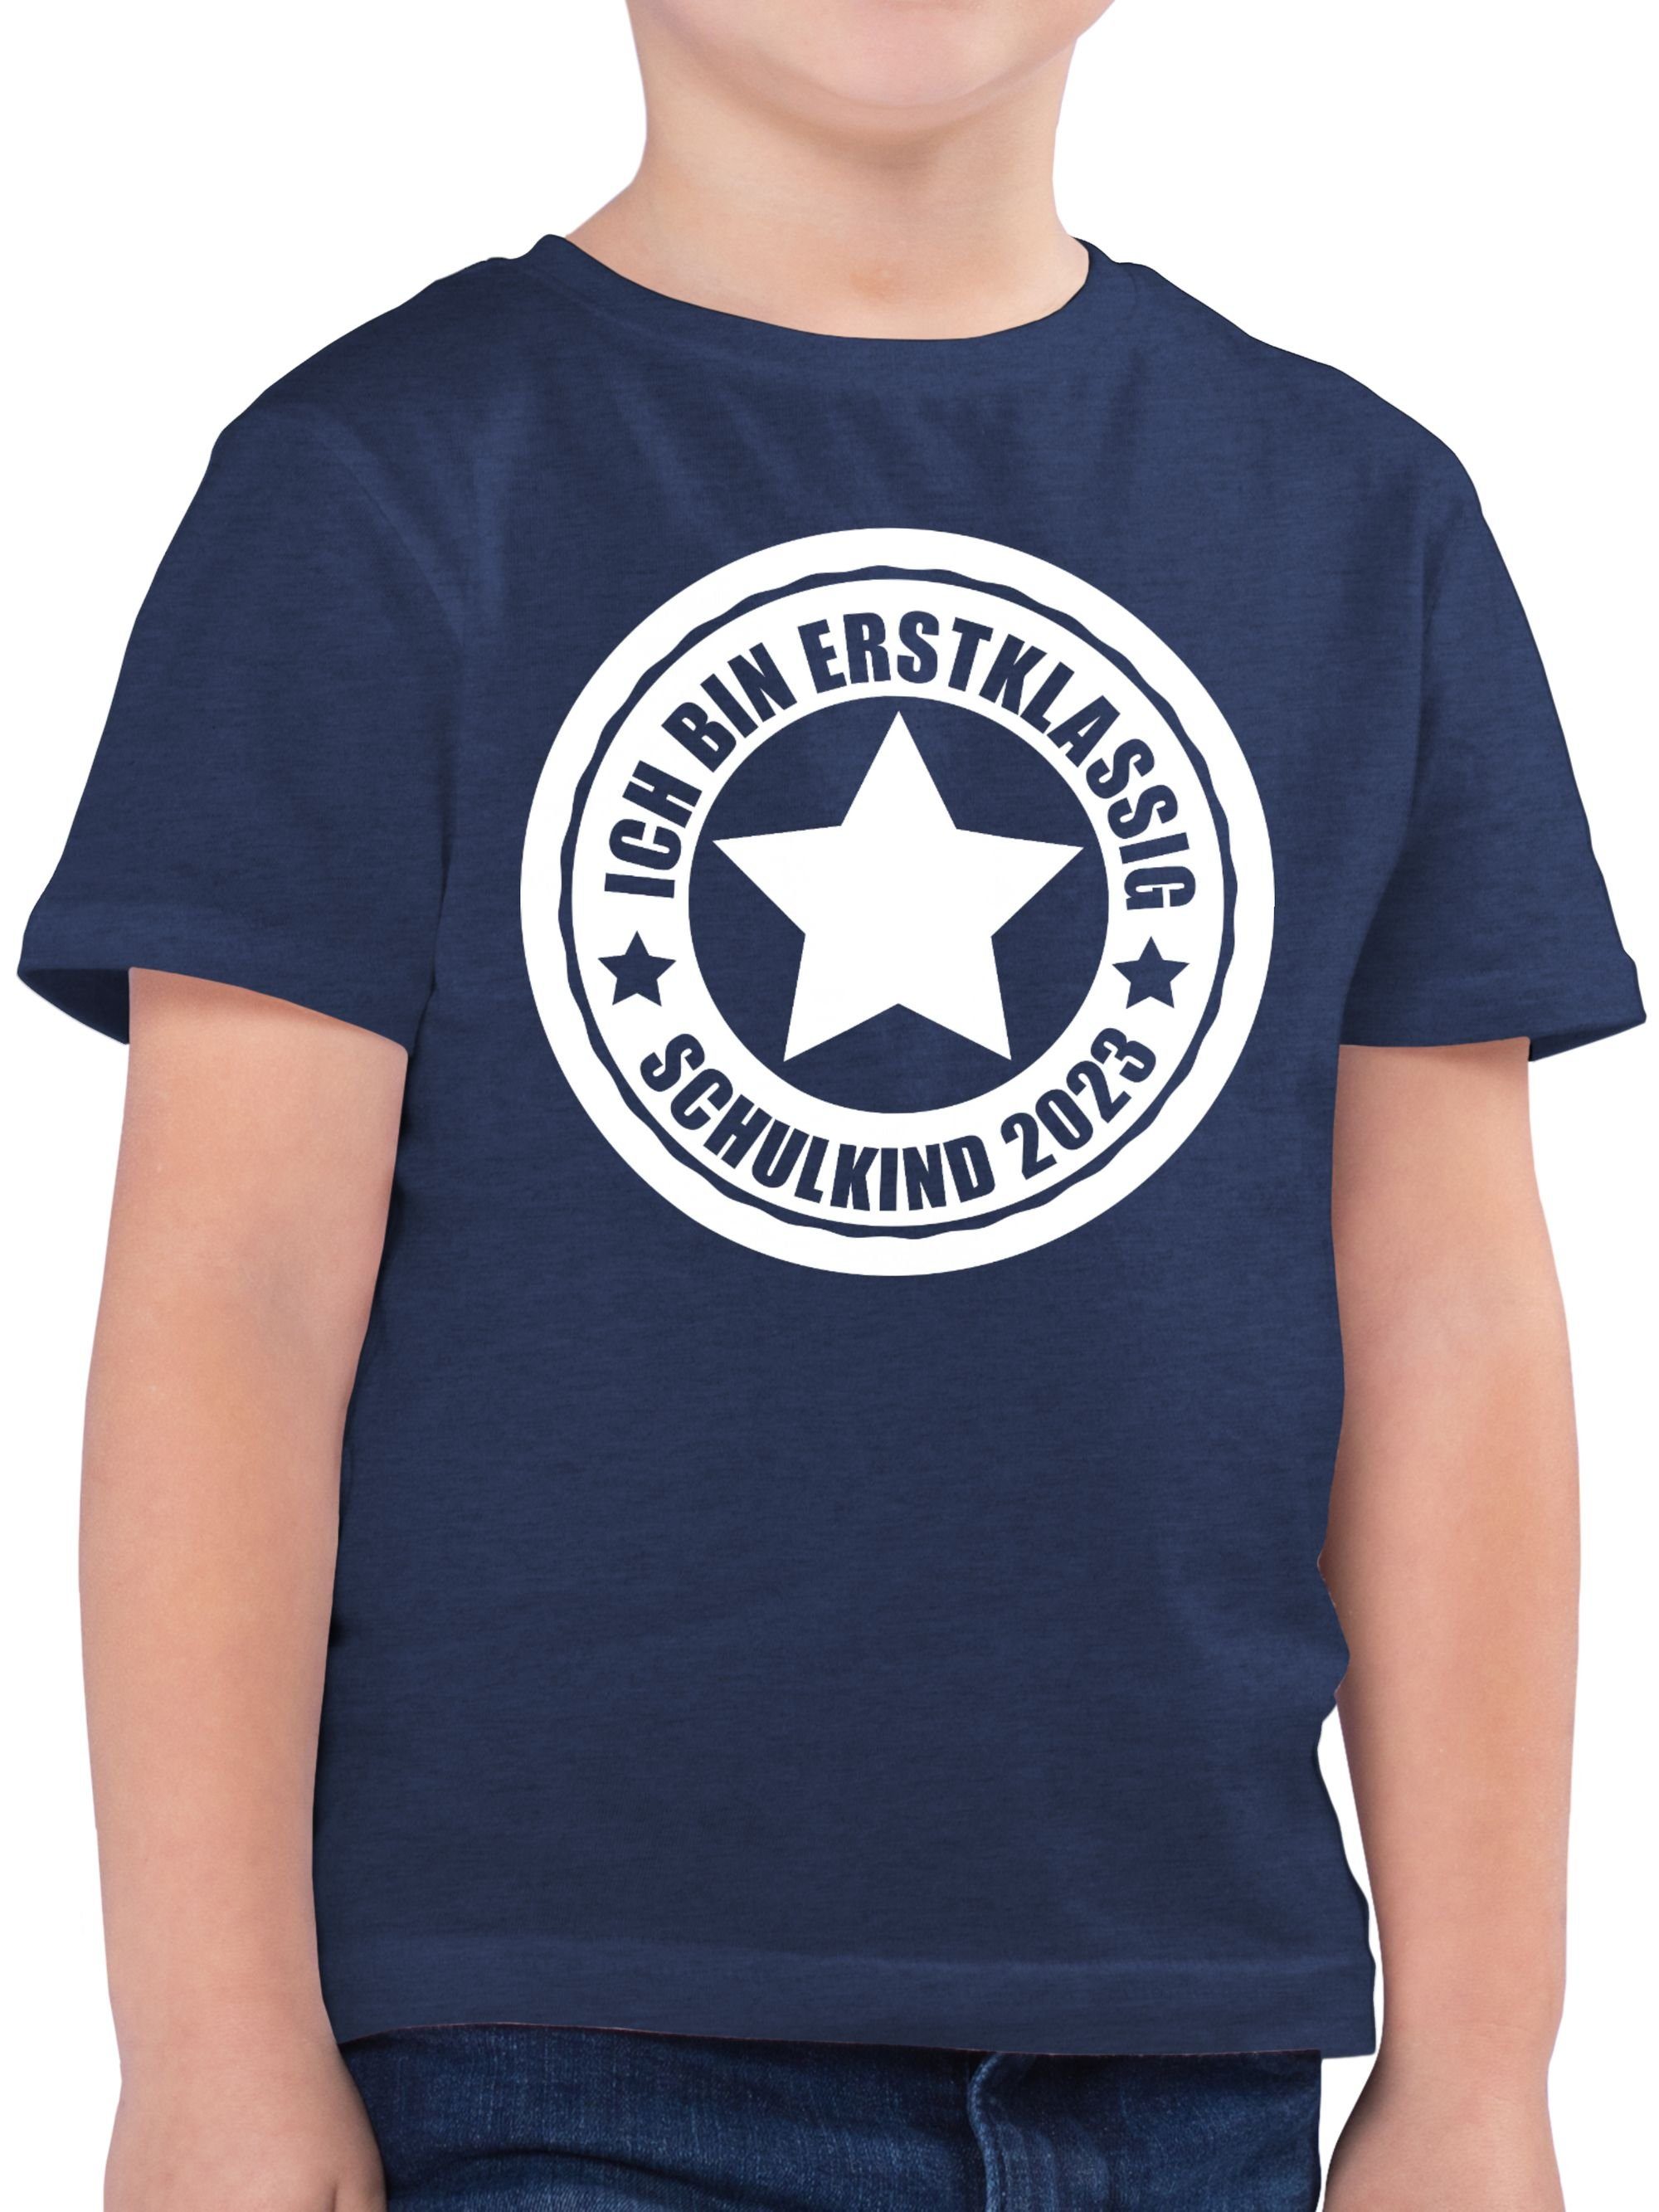 Shirtracer T-Shirt Ich bin erstklassig - Schulkind 2023 Einschulung Junge Schulanfang Geschenke 1 Dunkelblau Meliert